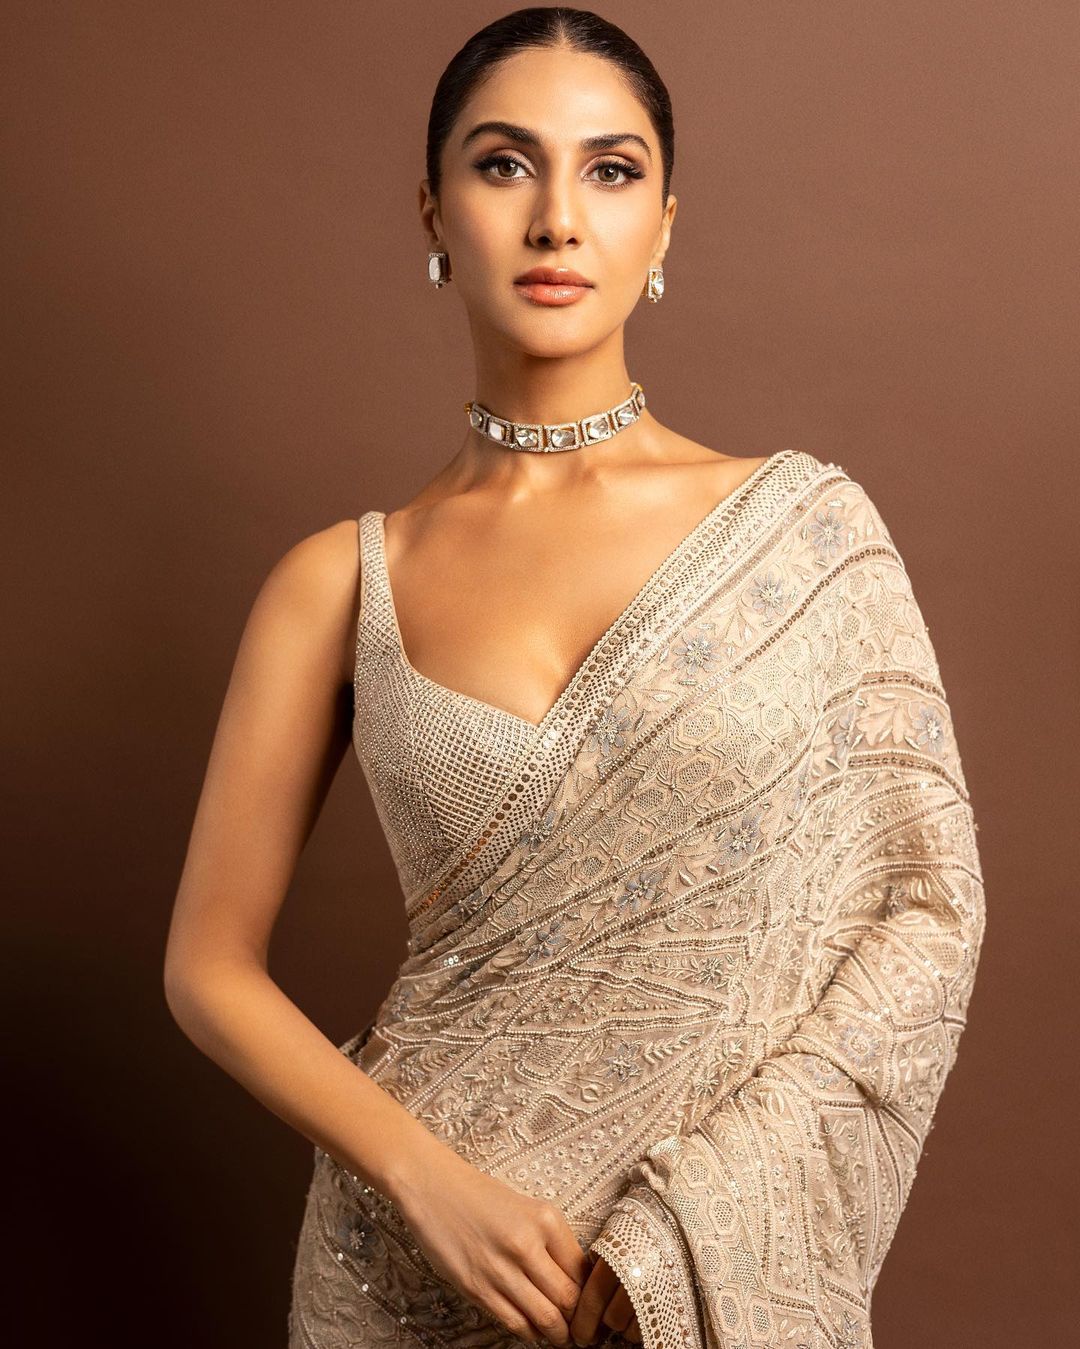 Vaani Kapoor wears Saree Designed by Tarun Tahiliani During Photoshoot, Feb 2023